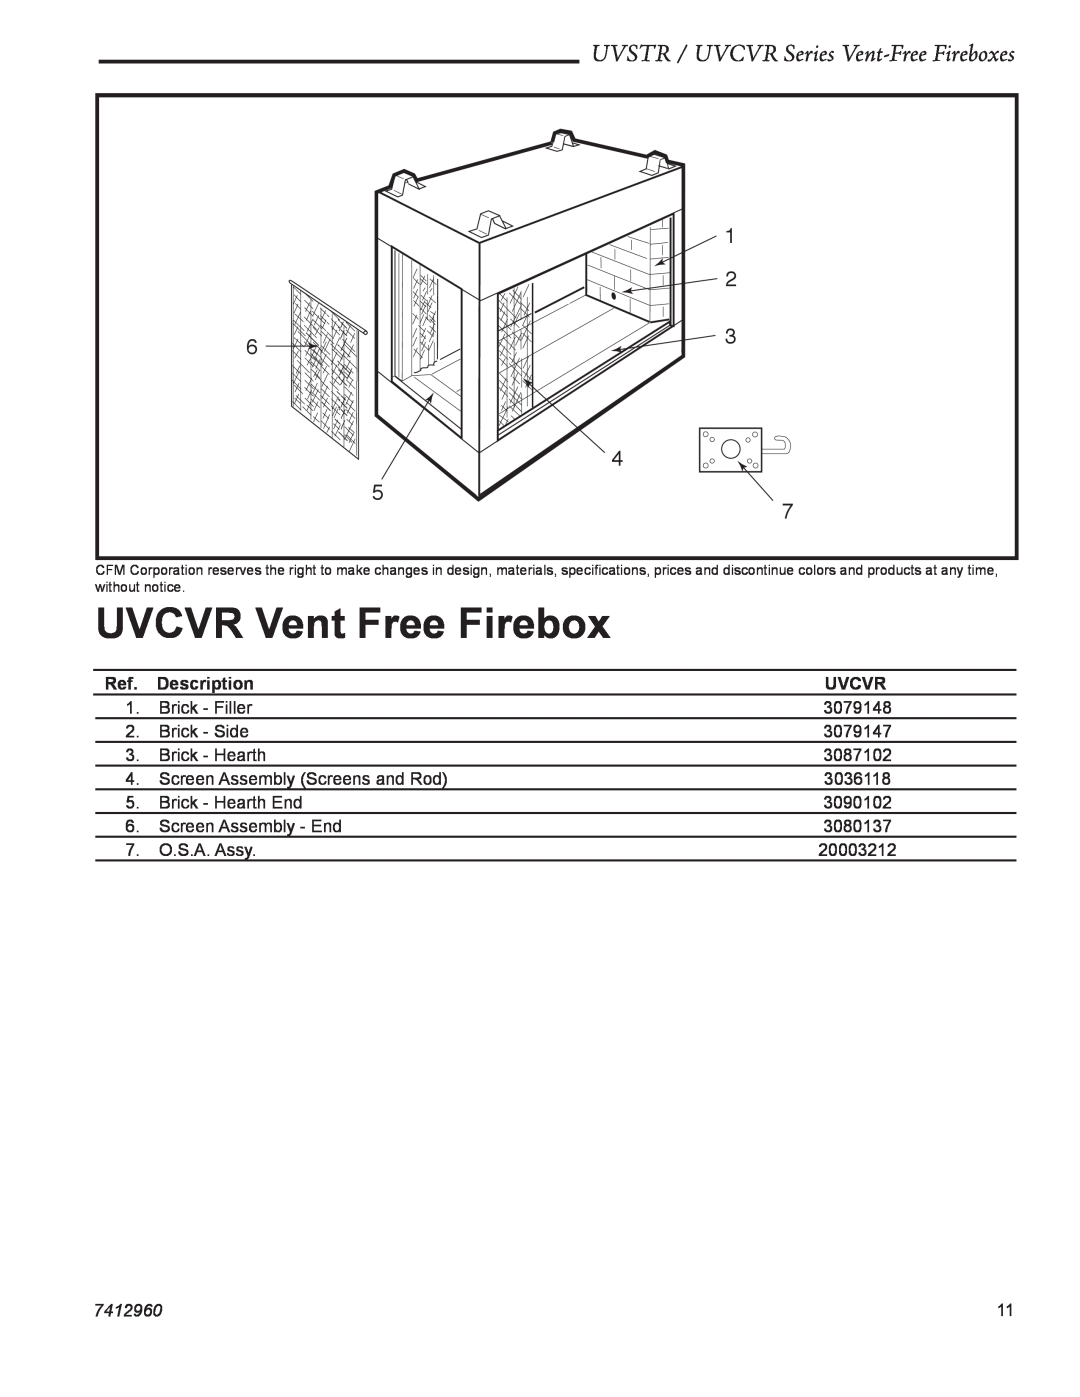 CFM UVCVR36, UVSTR36 UVCVR Vent Free Firebox, UVSTR / UVCVR Series Vent-Free Fireboxes, Description, Uvcvr, 7412960 